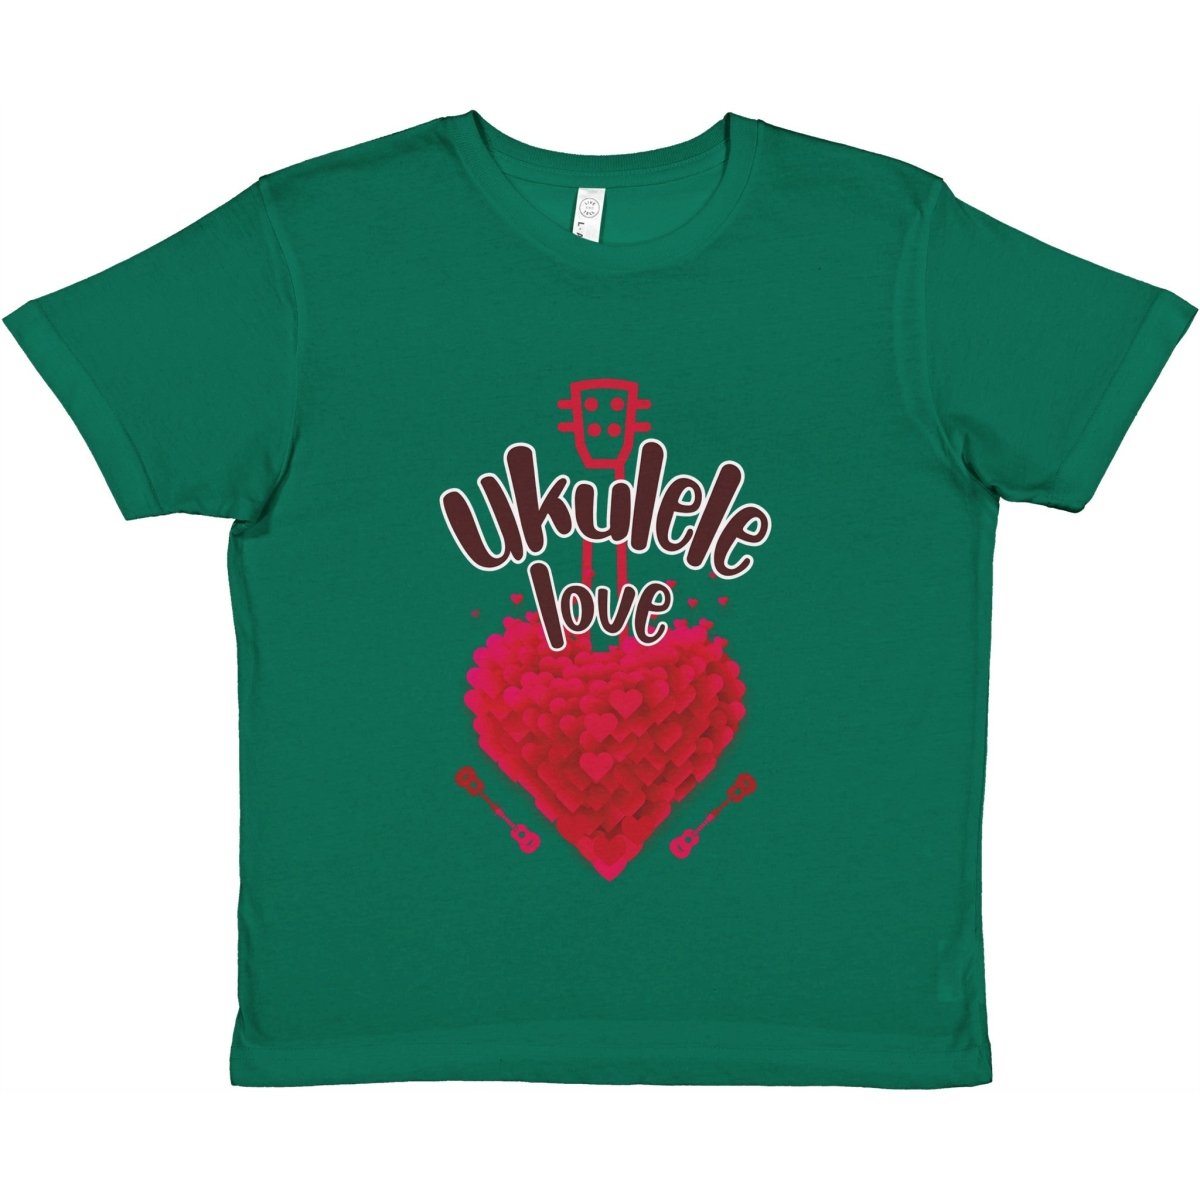 Premium 'Ukulele Love' Kids Crewneck T-shirt - Uke Tastic - S - Children - Uke Tastic